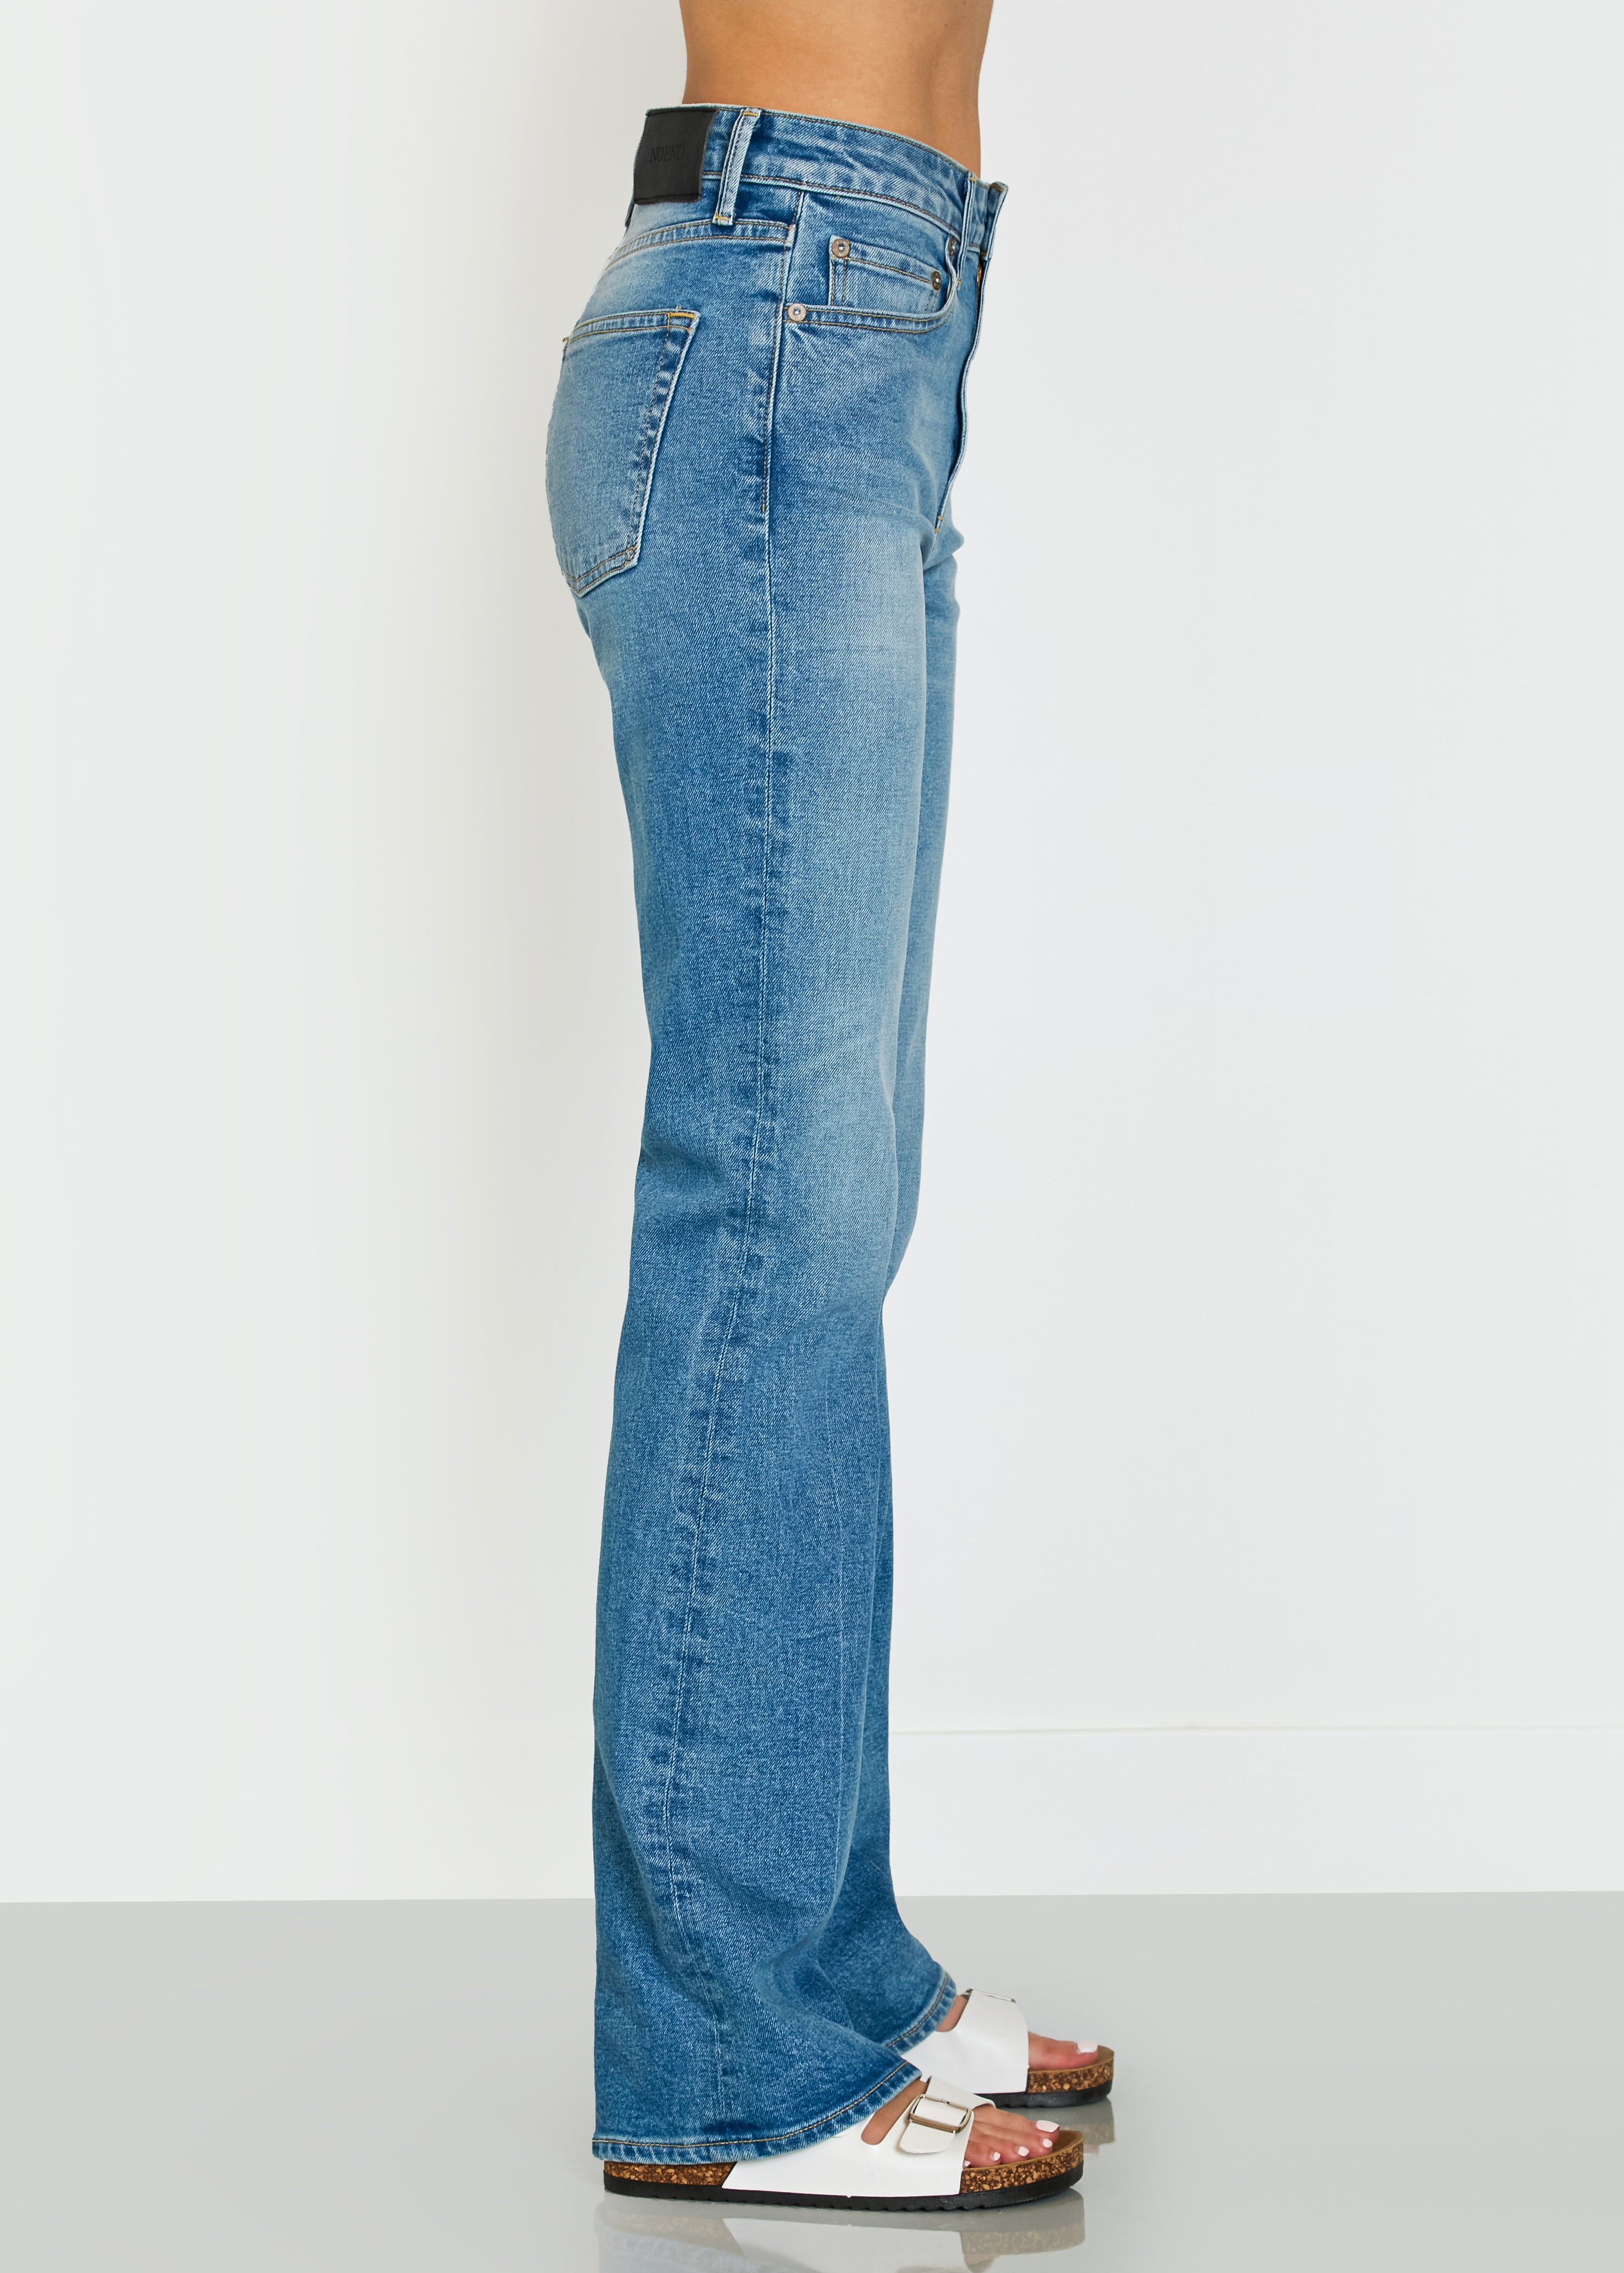 nsendm Female Pants Adult Jean Pants for Women Stretchy Women's Jeans Micro Flare  Pants Middle Waist Jeans Woman Jean Pants(Light Blue, L) 